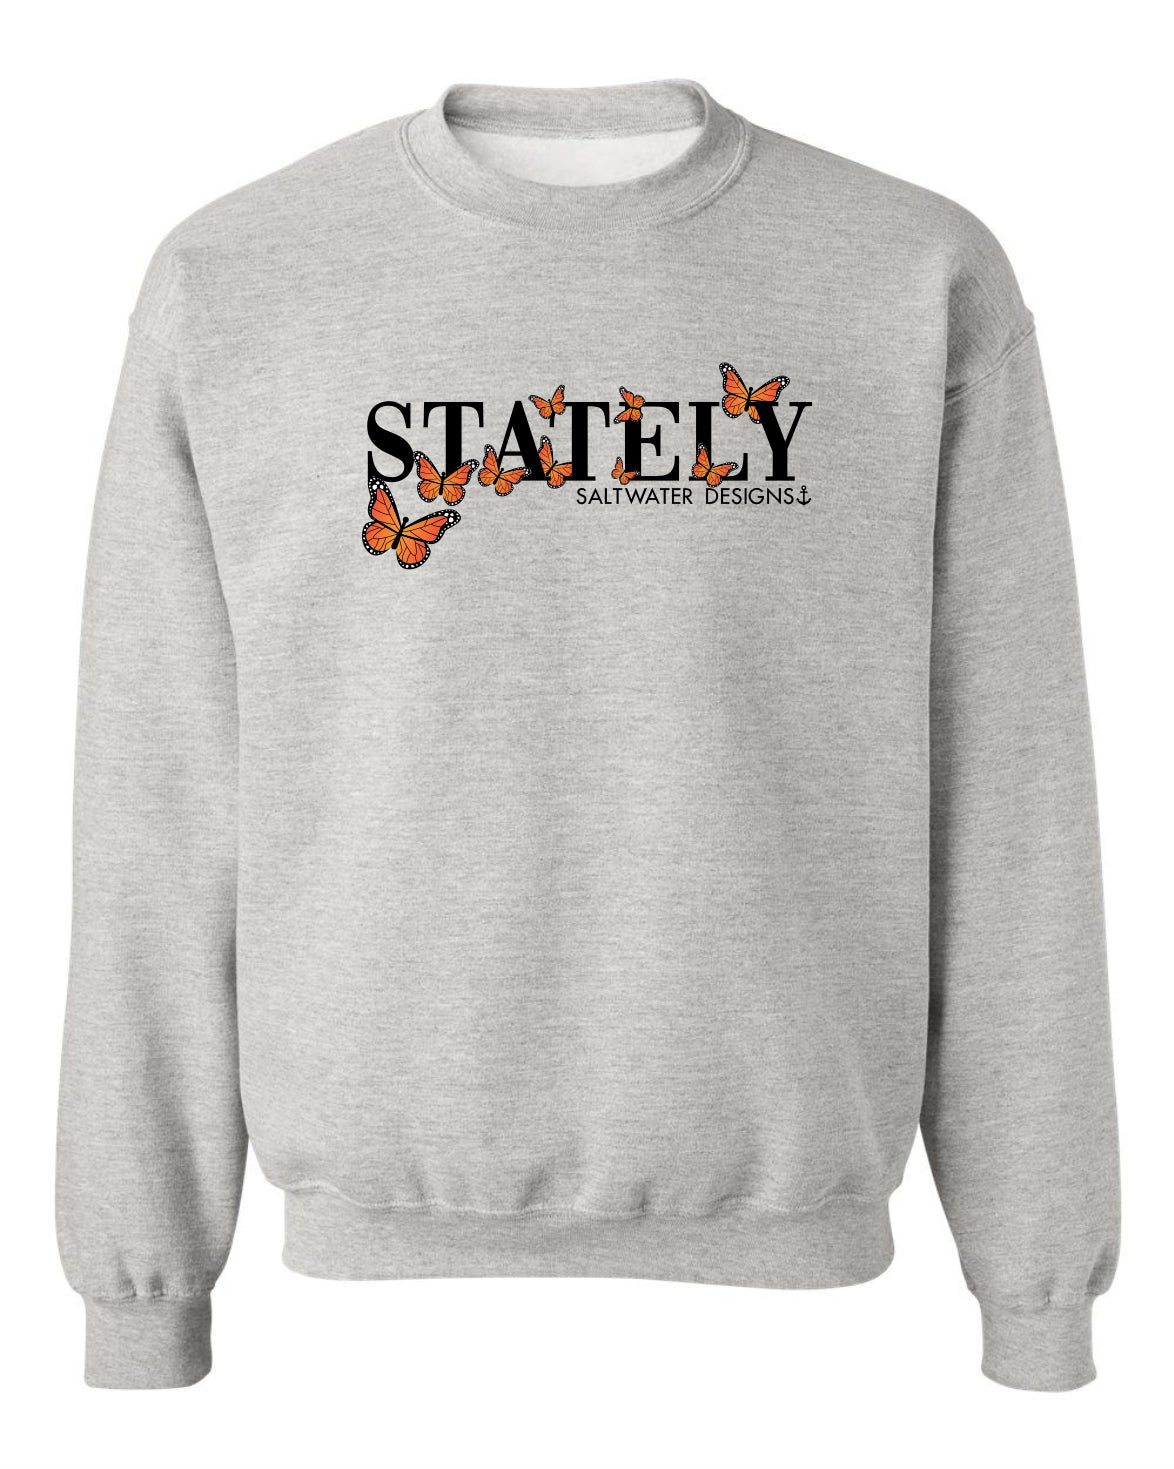 "Stately" Butterflies Unisex Crewneck Sweatshirt